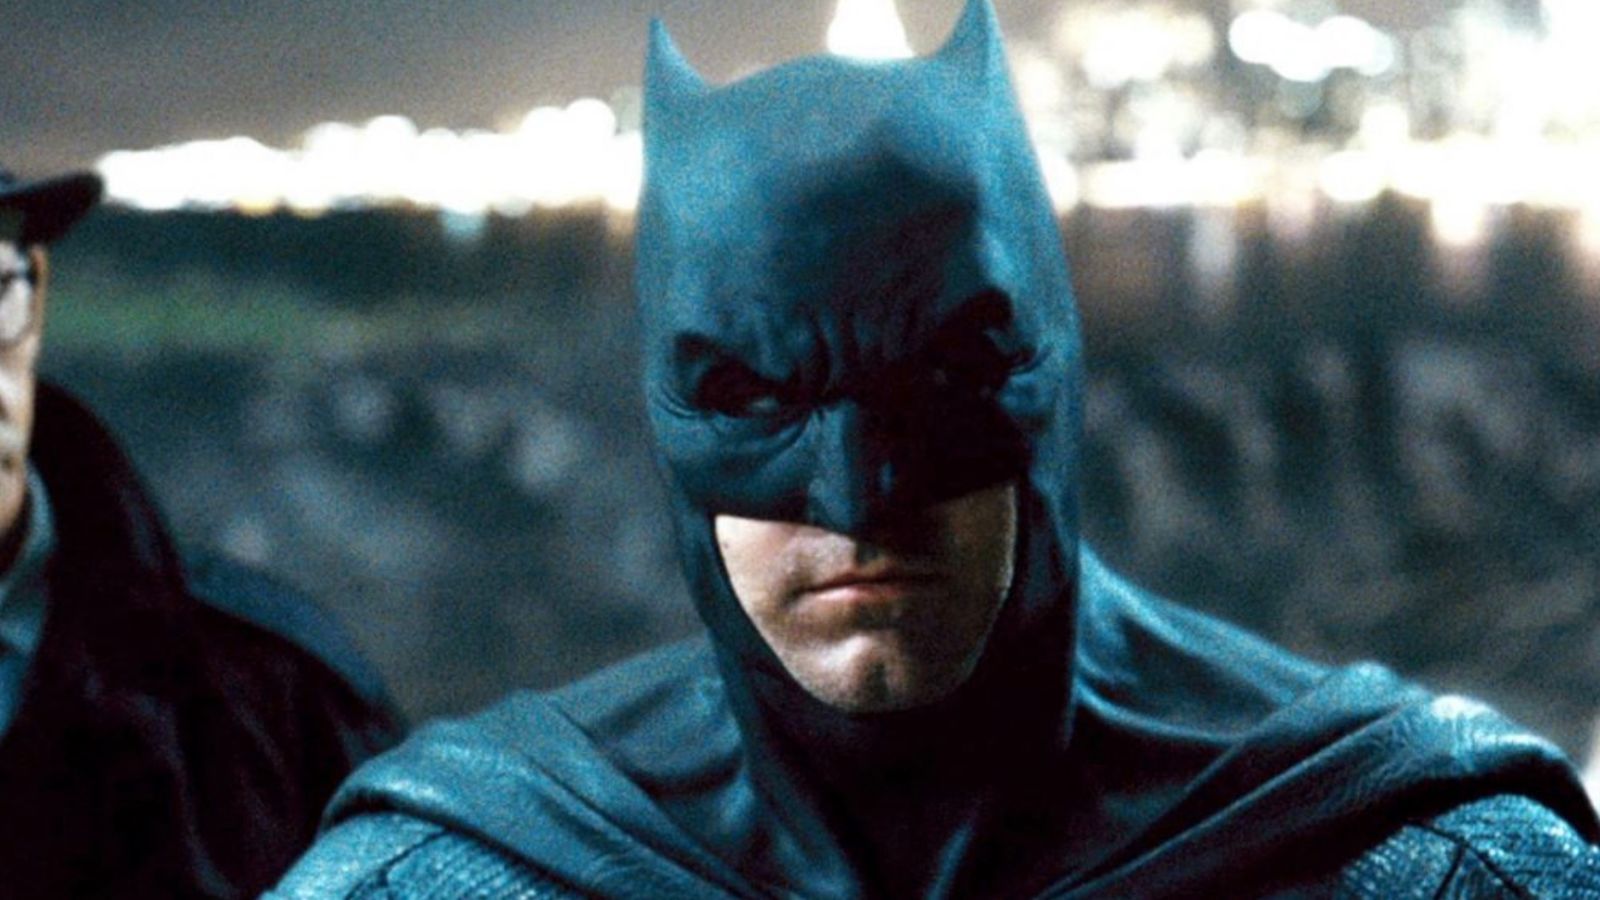 New Batman movie Release date In June of 2021